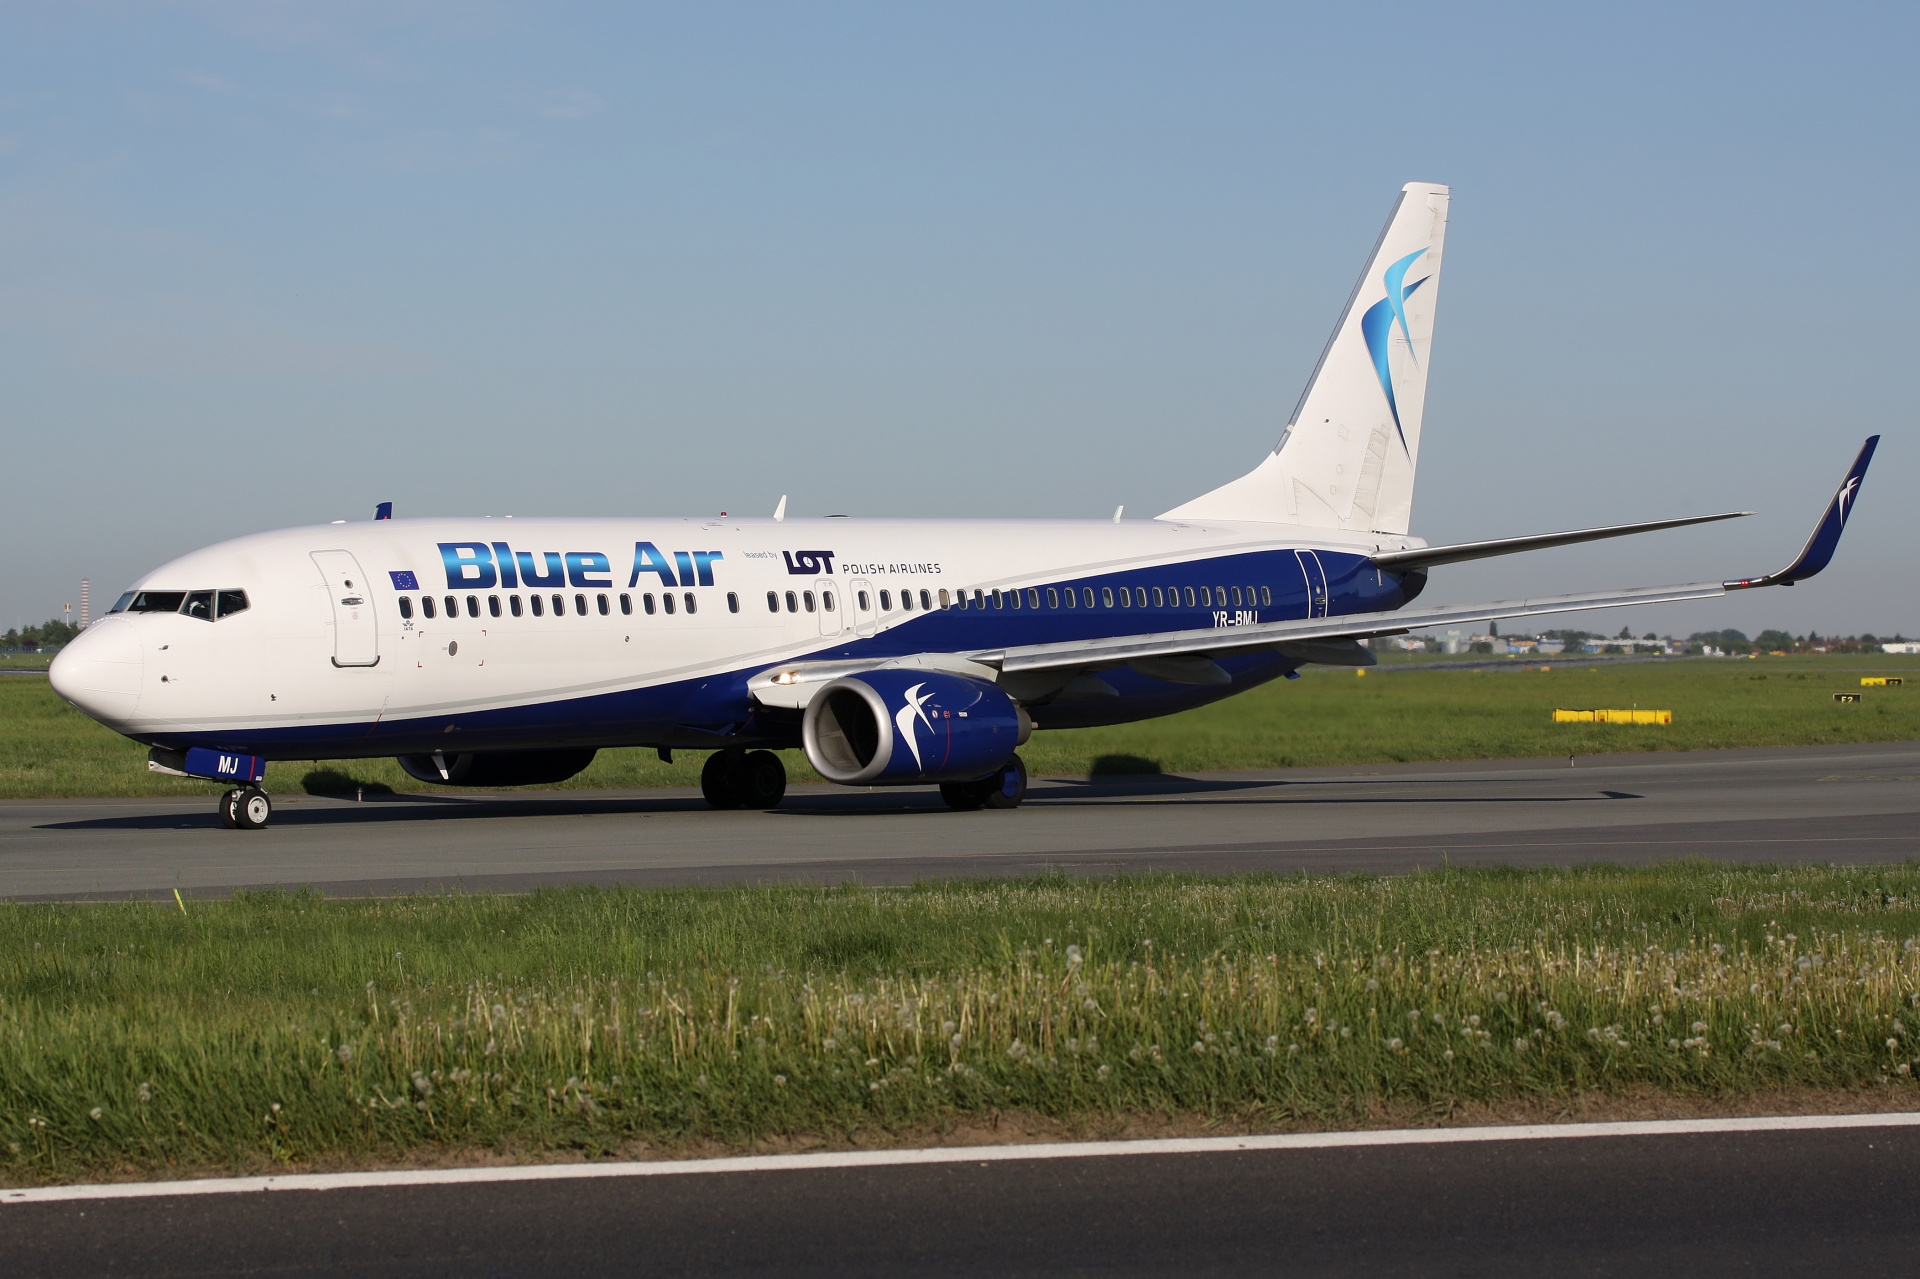 YR-BMJ (LOT Polish Airlines) (Aircraft » EPWA Spotting » Boeing 737-800 » Blue Air)